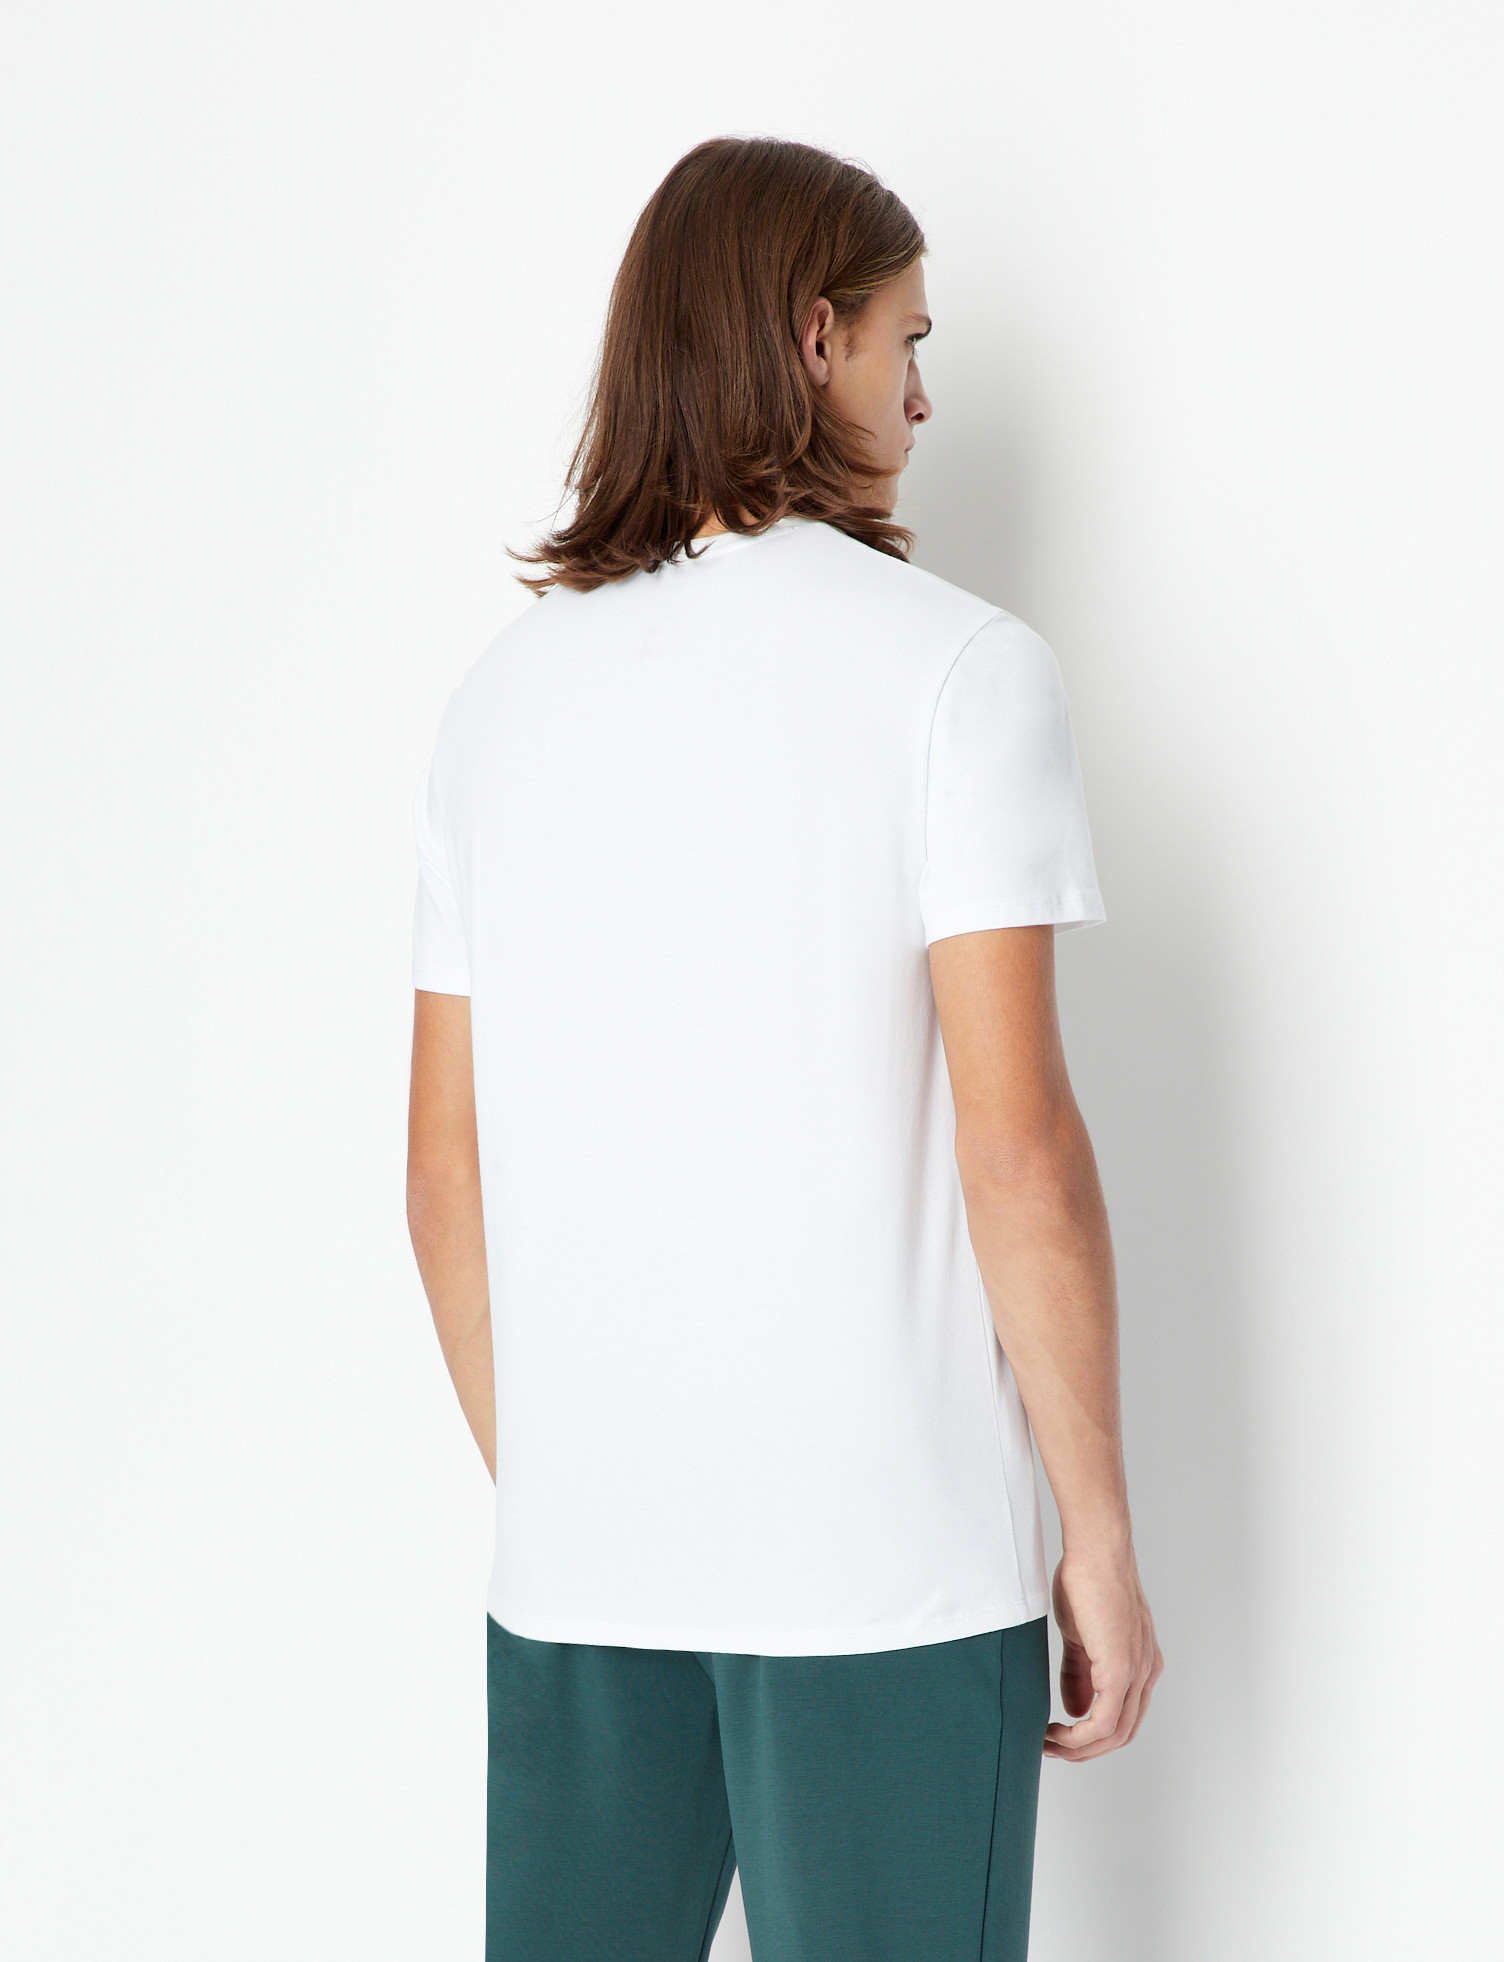 Armani Exchange - T-shirt con stampa slim fit, Bianco, large